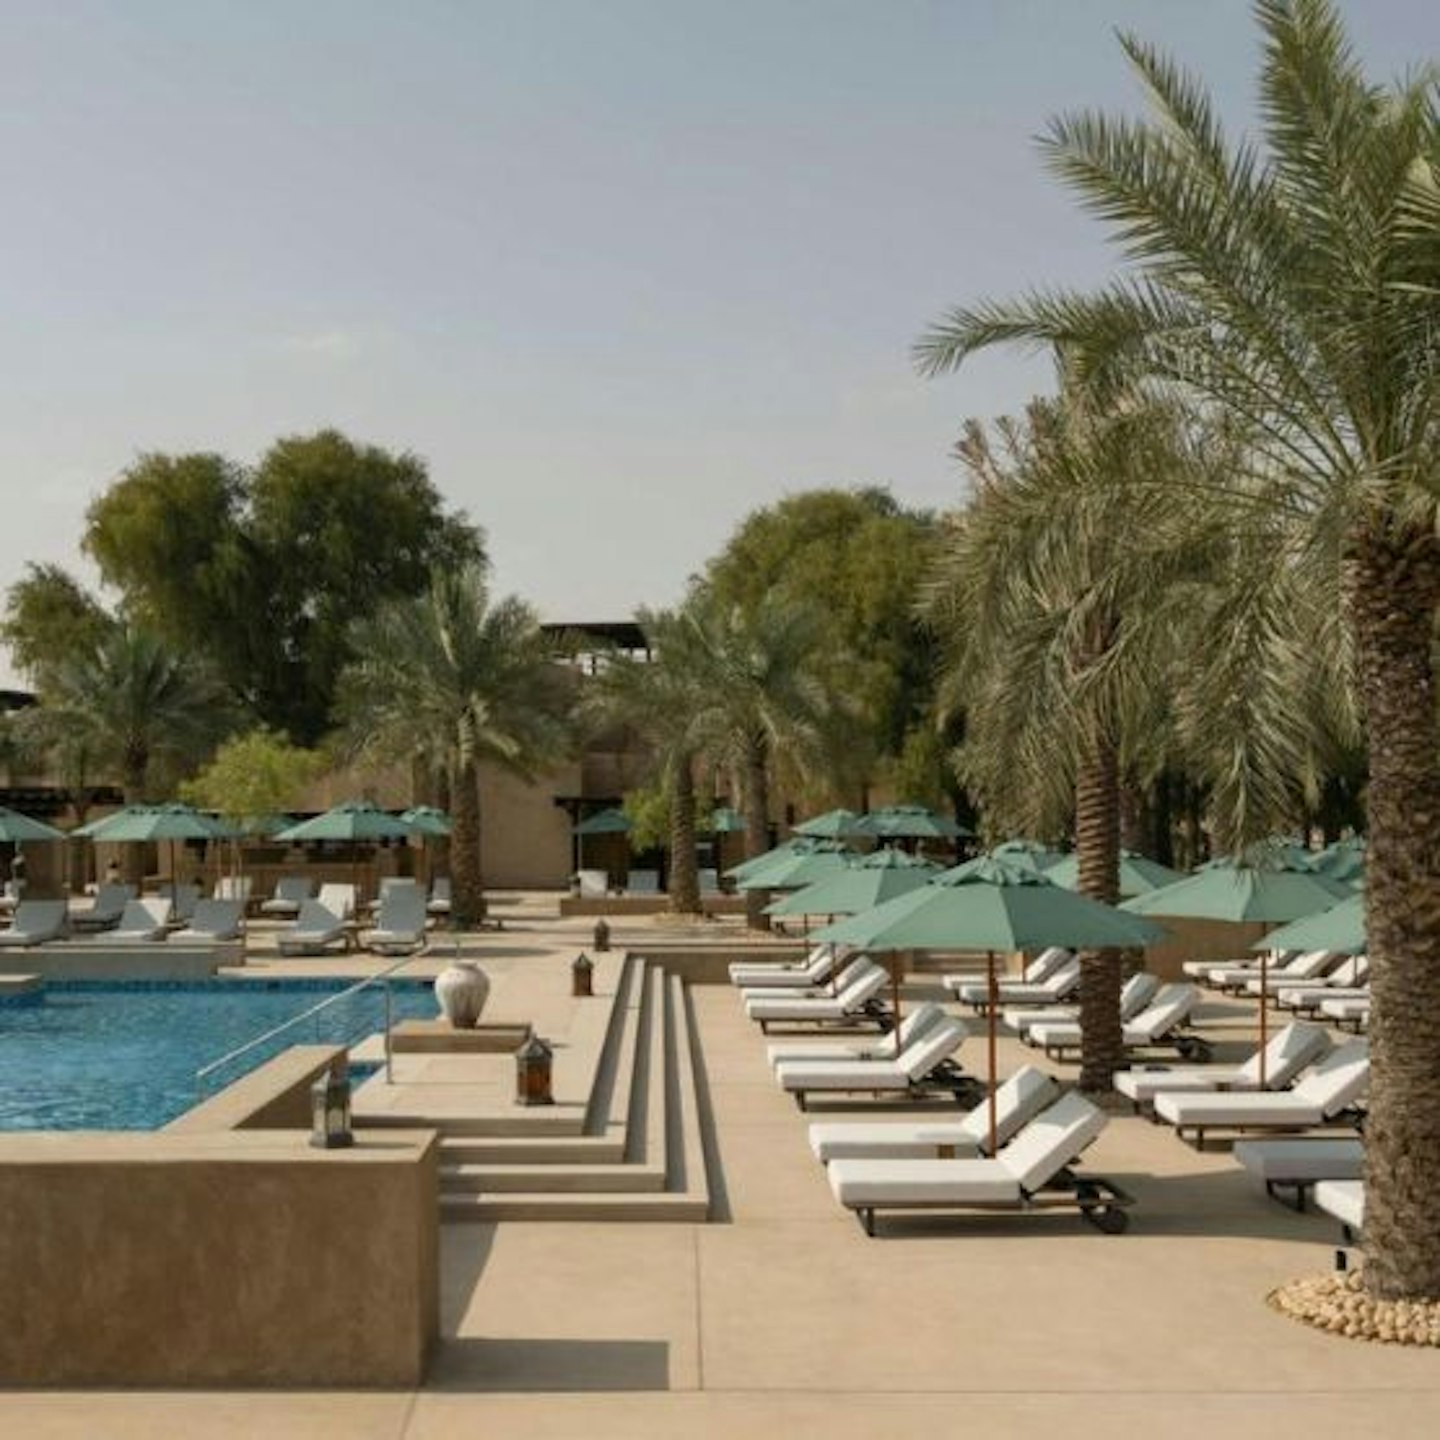 View of the pool, sun loungers and palm trees at Bab Al Sham, Dubai